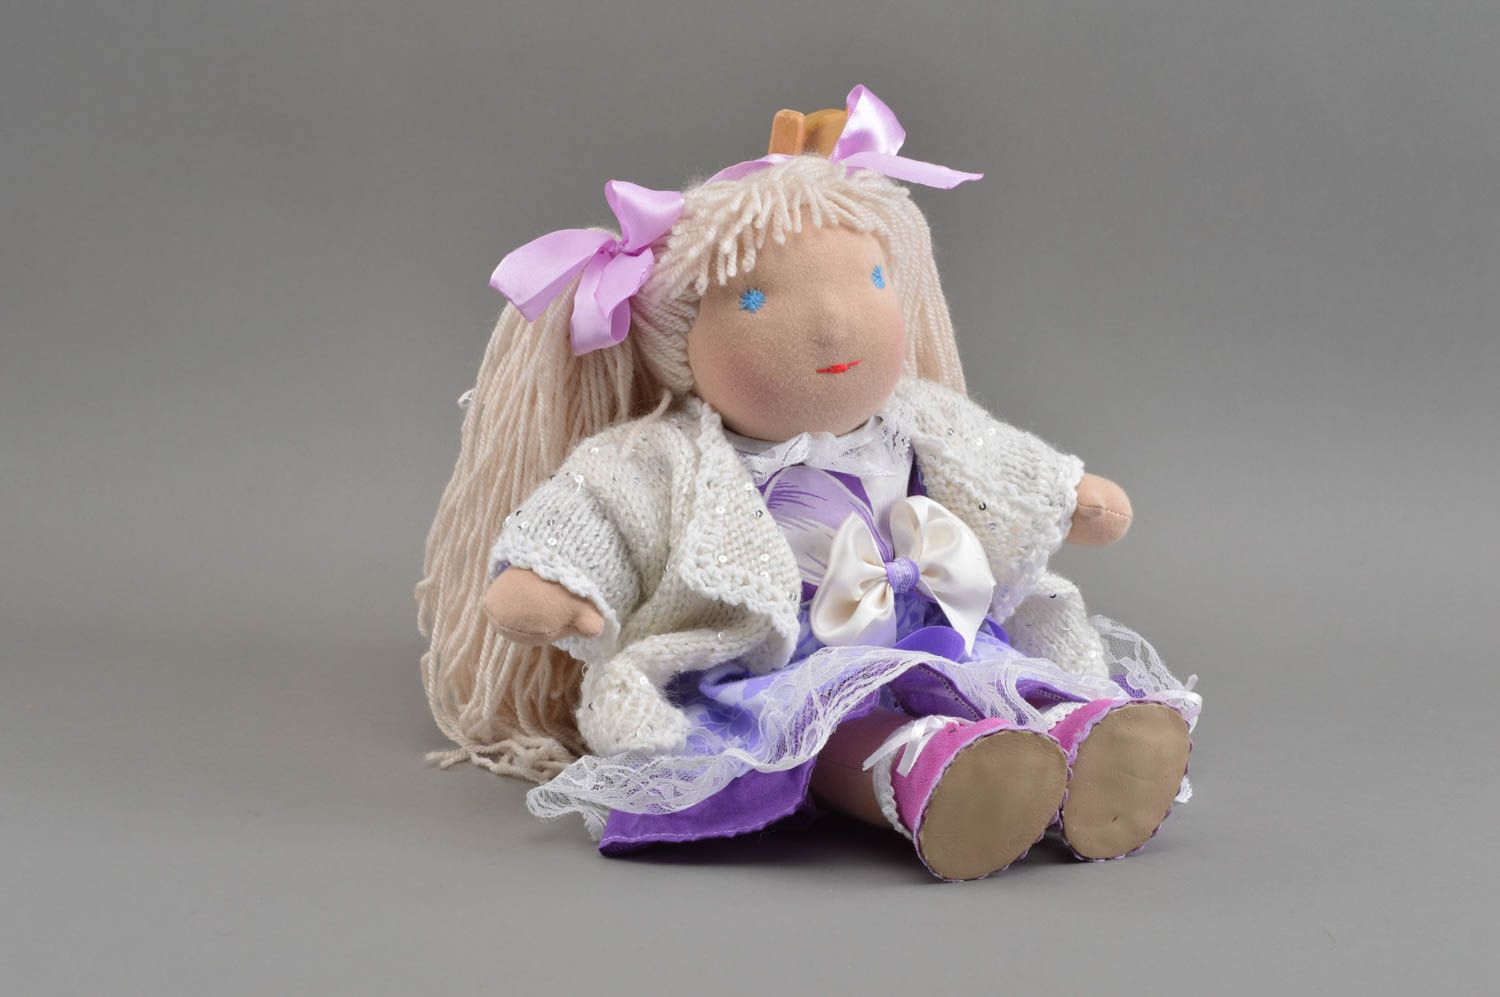 Handmade soft doll nursery decor ideas fabric stuffed toy for children photo 2